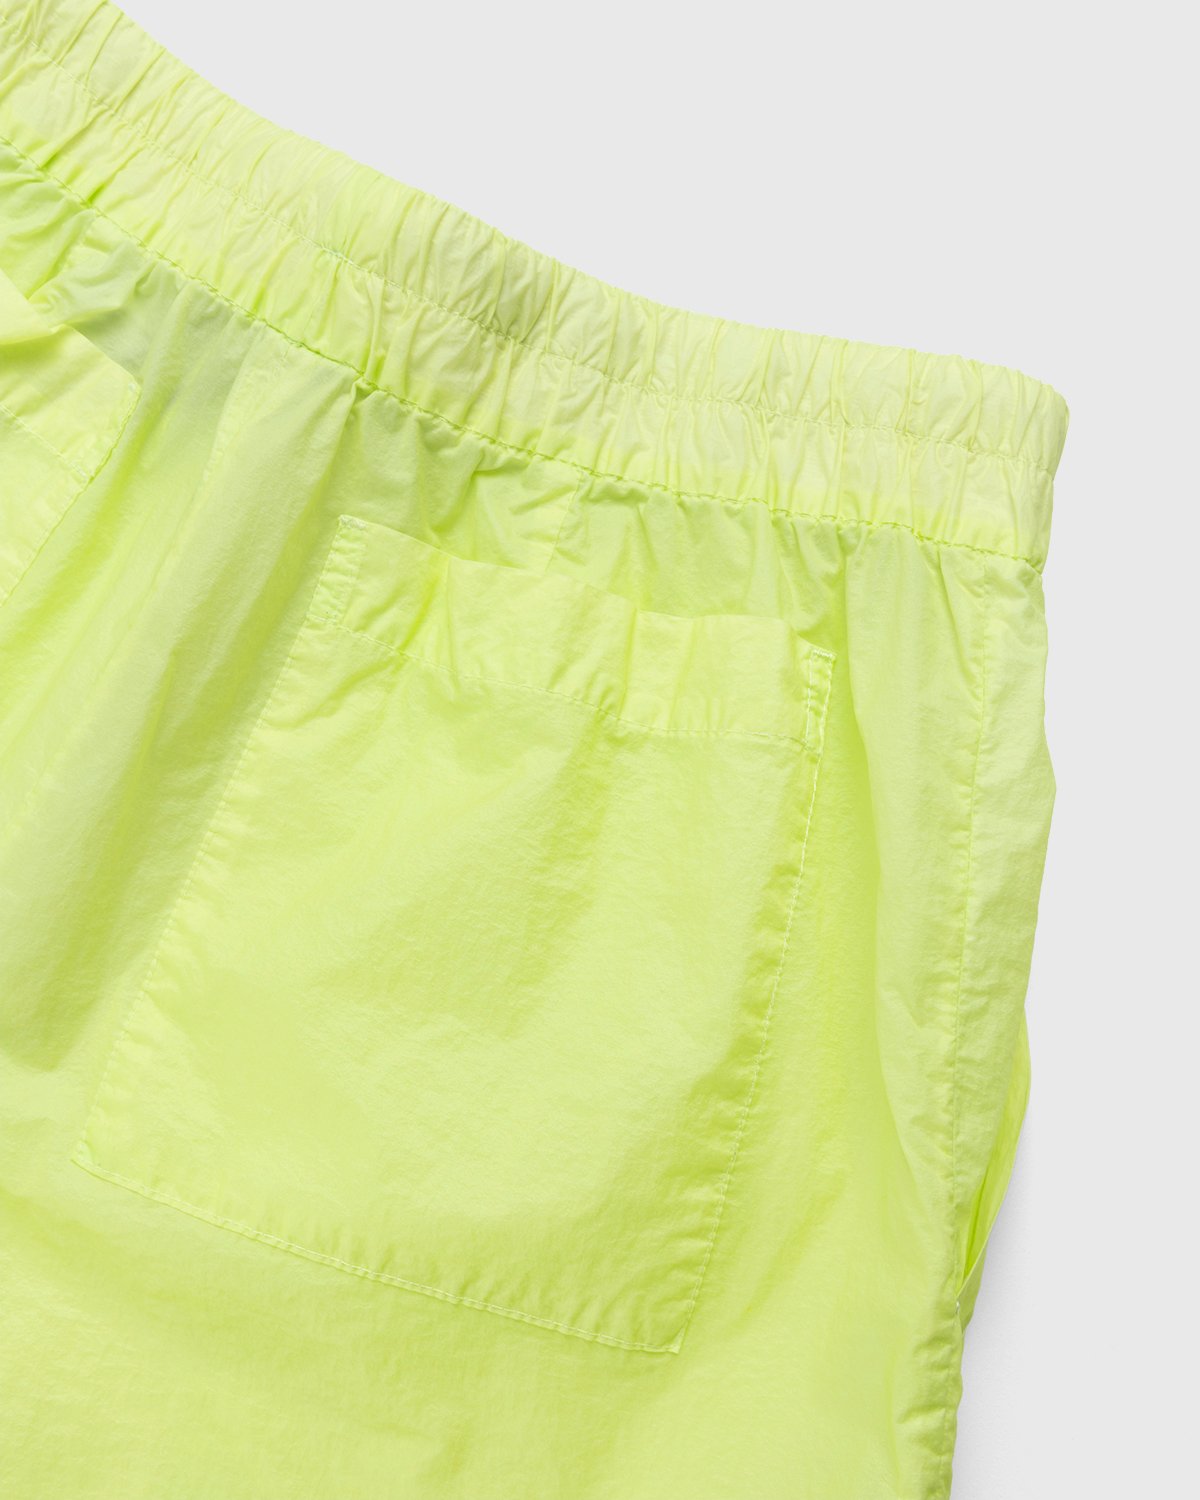 Dries van Noten - Pooles Shorts Lime - Clothing - Green - Image 3